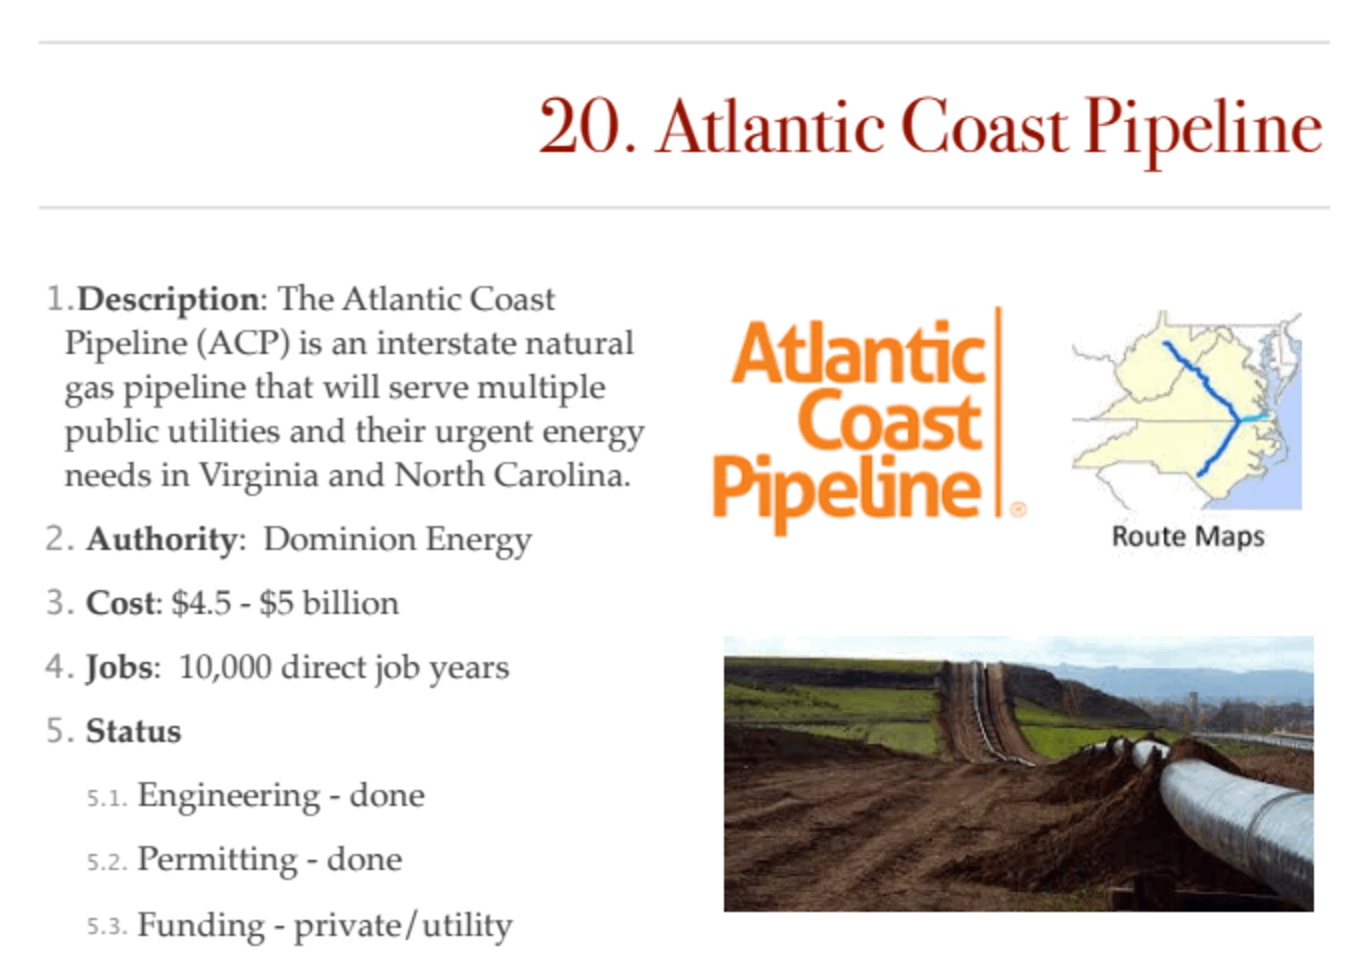 Presentation slide of Atlantic Coast pipeline project description from leaked document